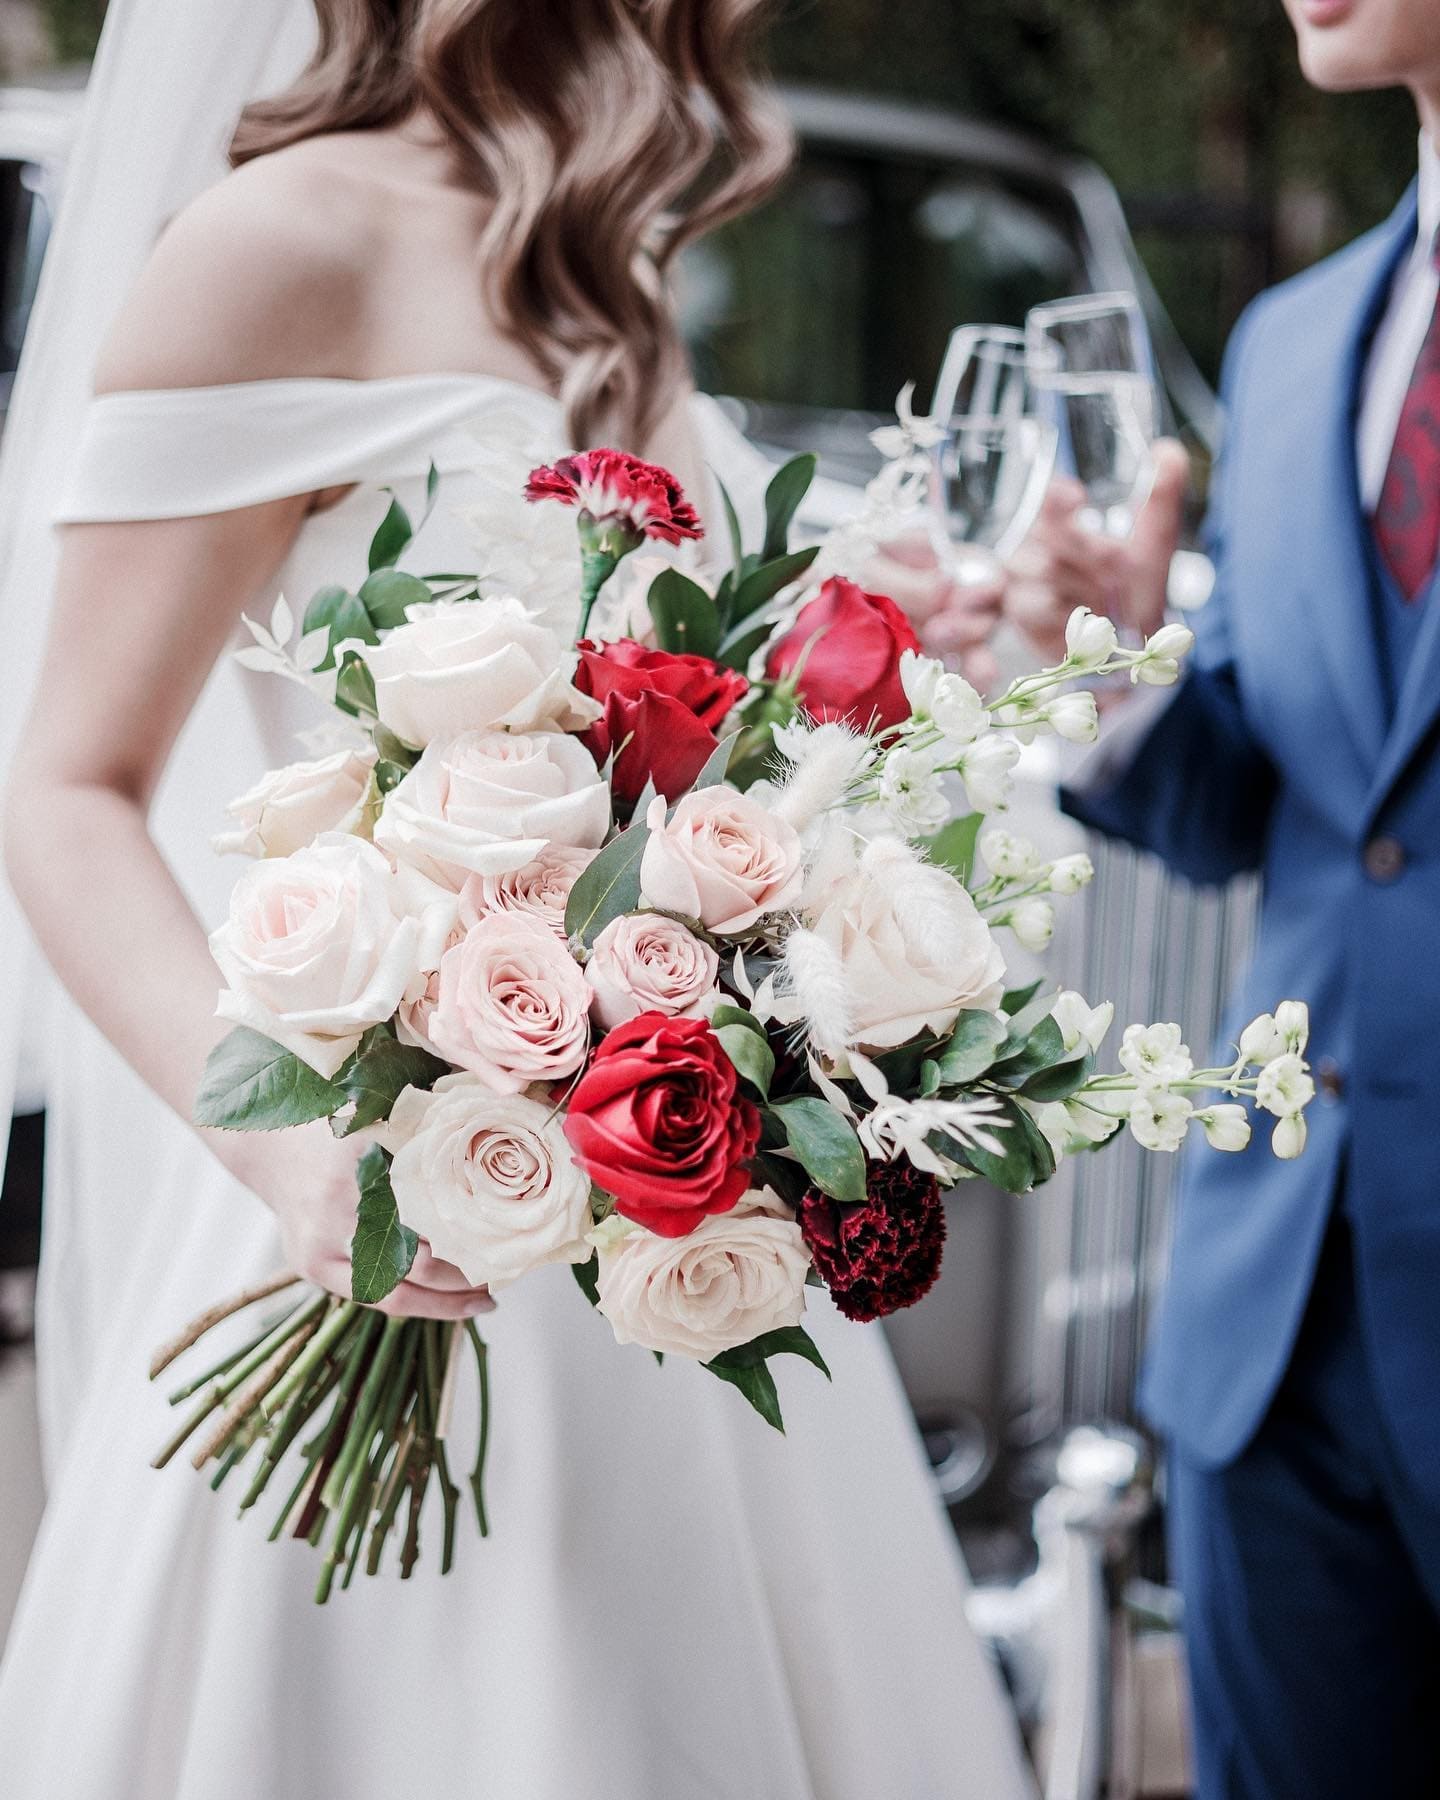 Wedding Bouquet - Rose Bouquet - Flower Head Events - Australia